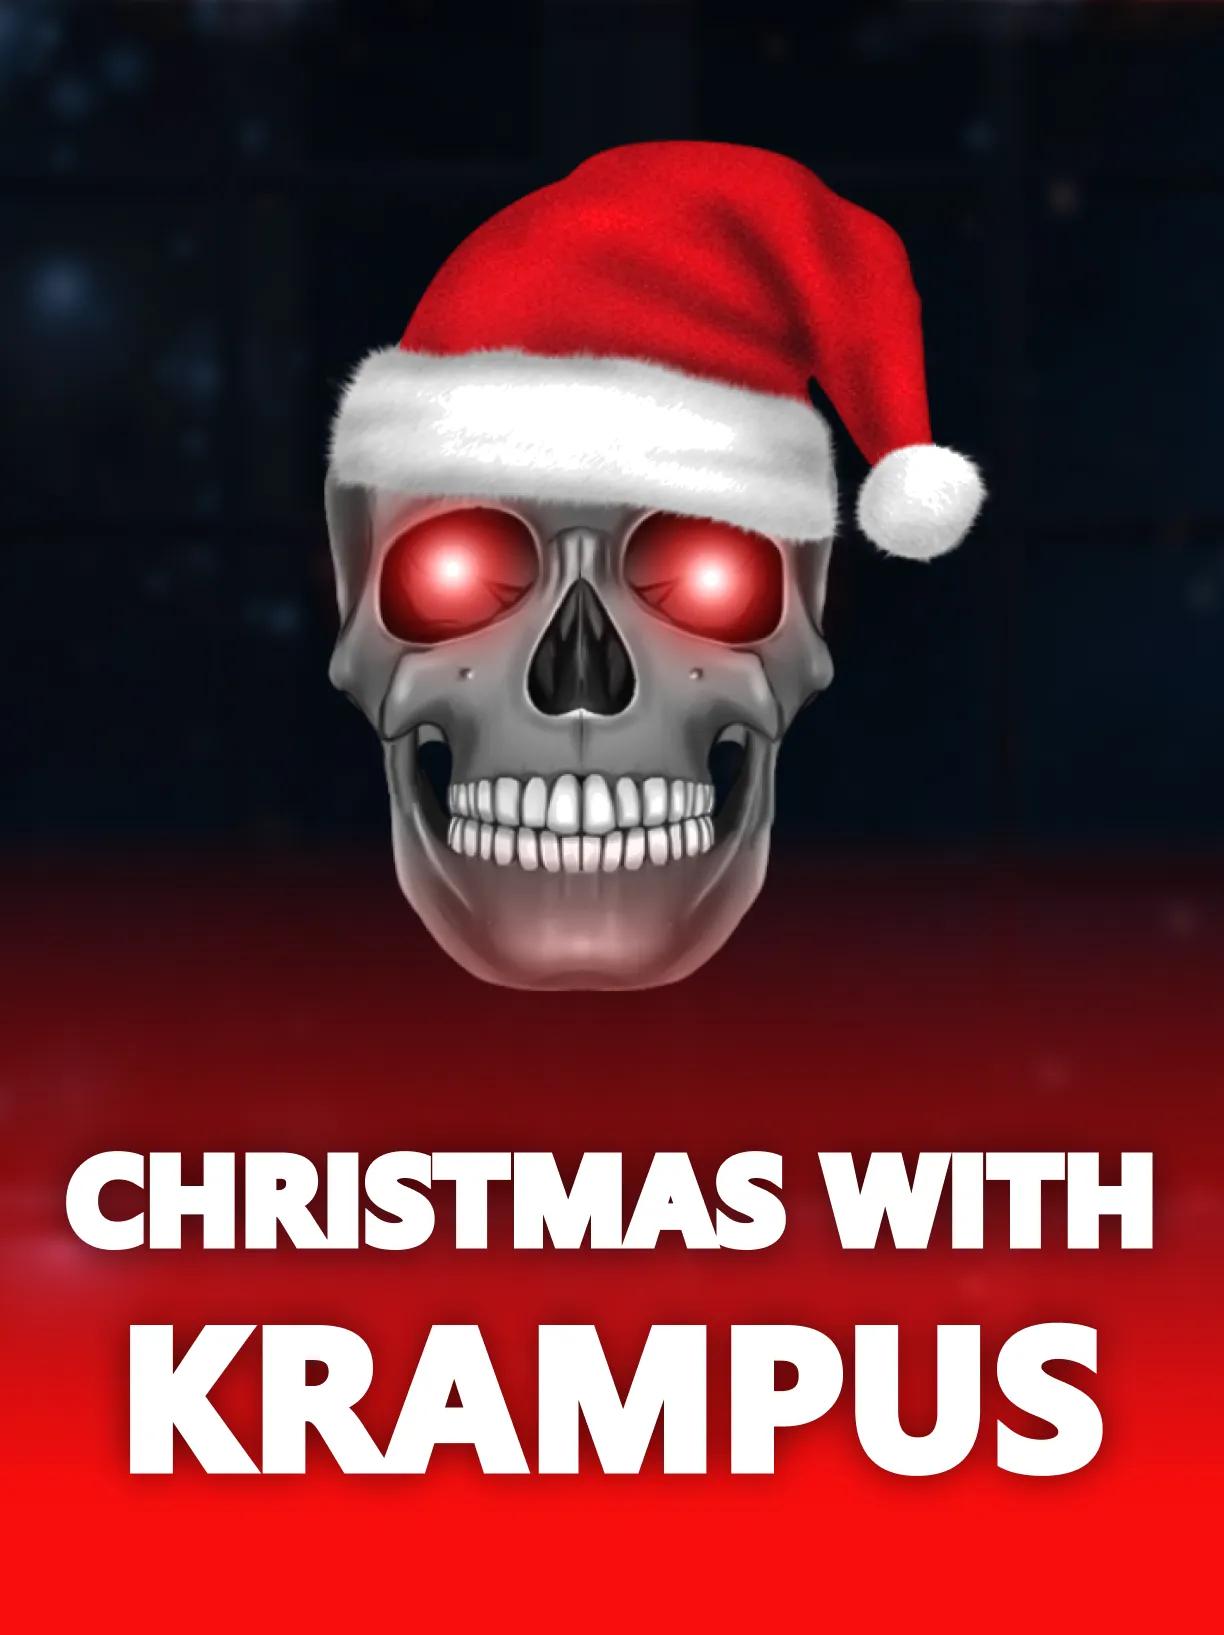 ug_Christmas_with_Krampus_square.webp